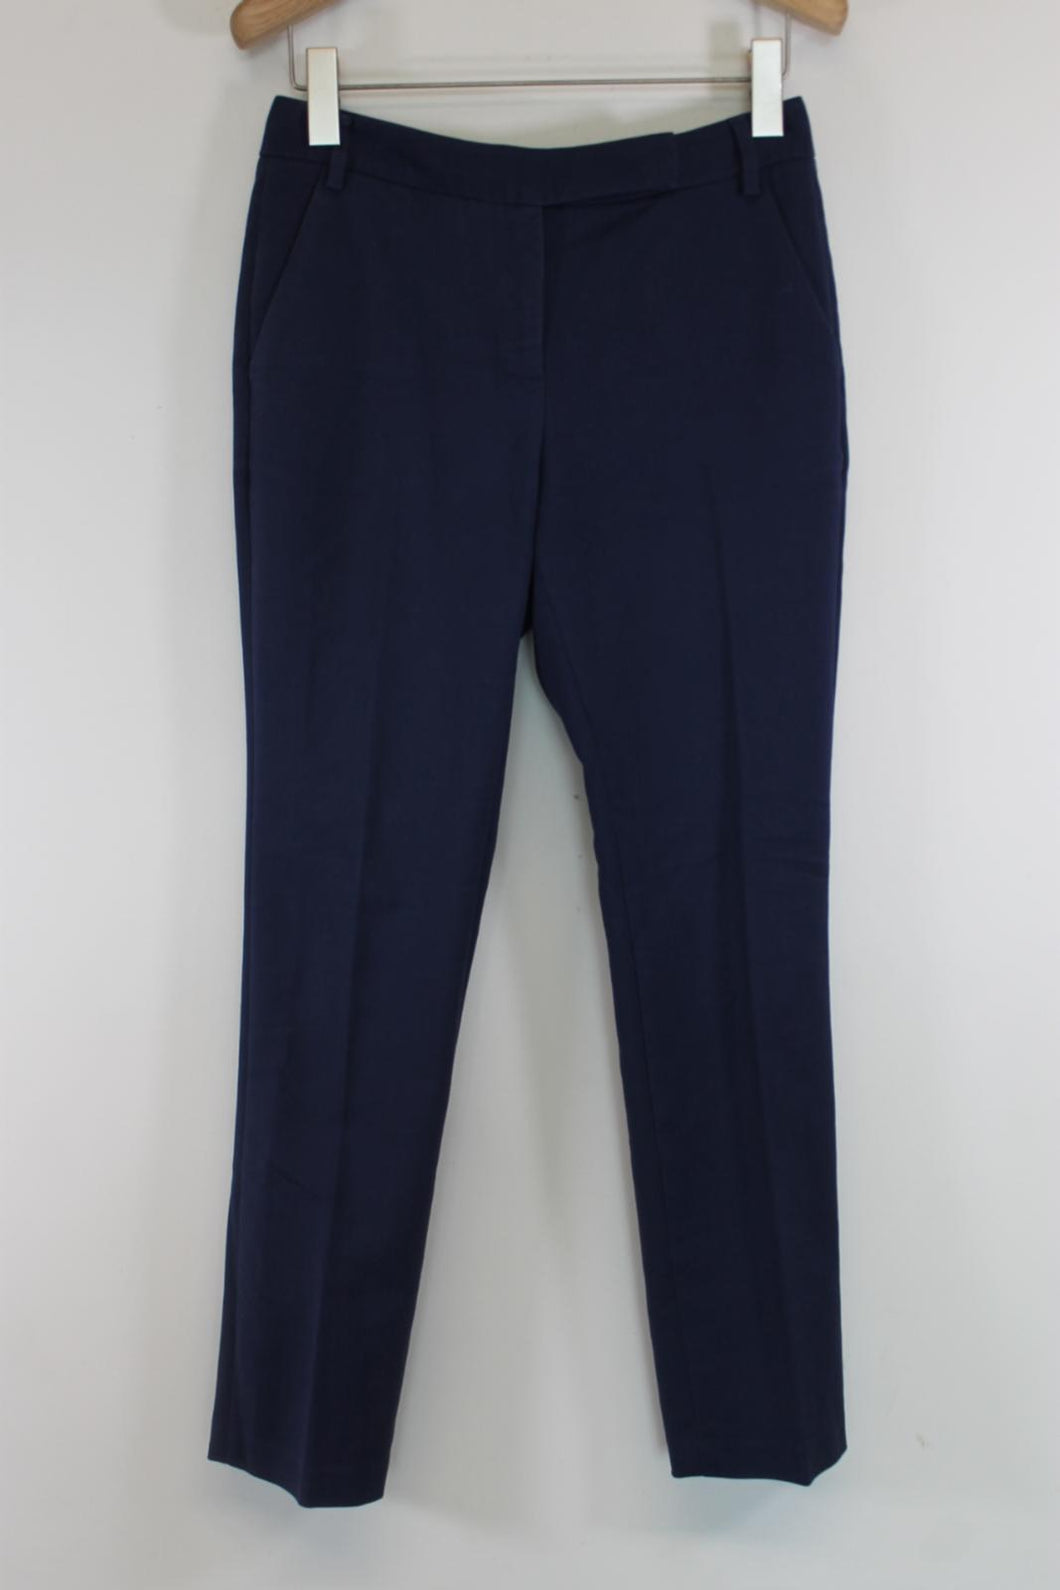 REISS Ladies Navy Blue Cotton Joanna Slim Fit Dress Trousers EU34 UK6